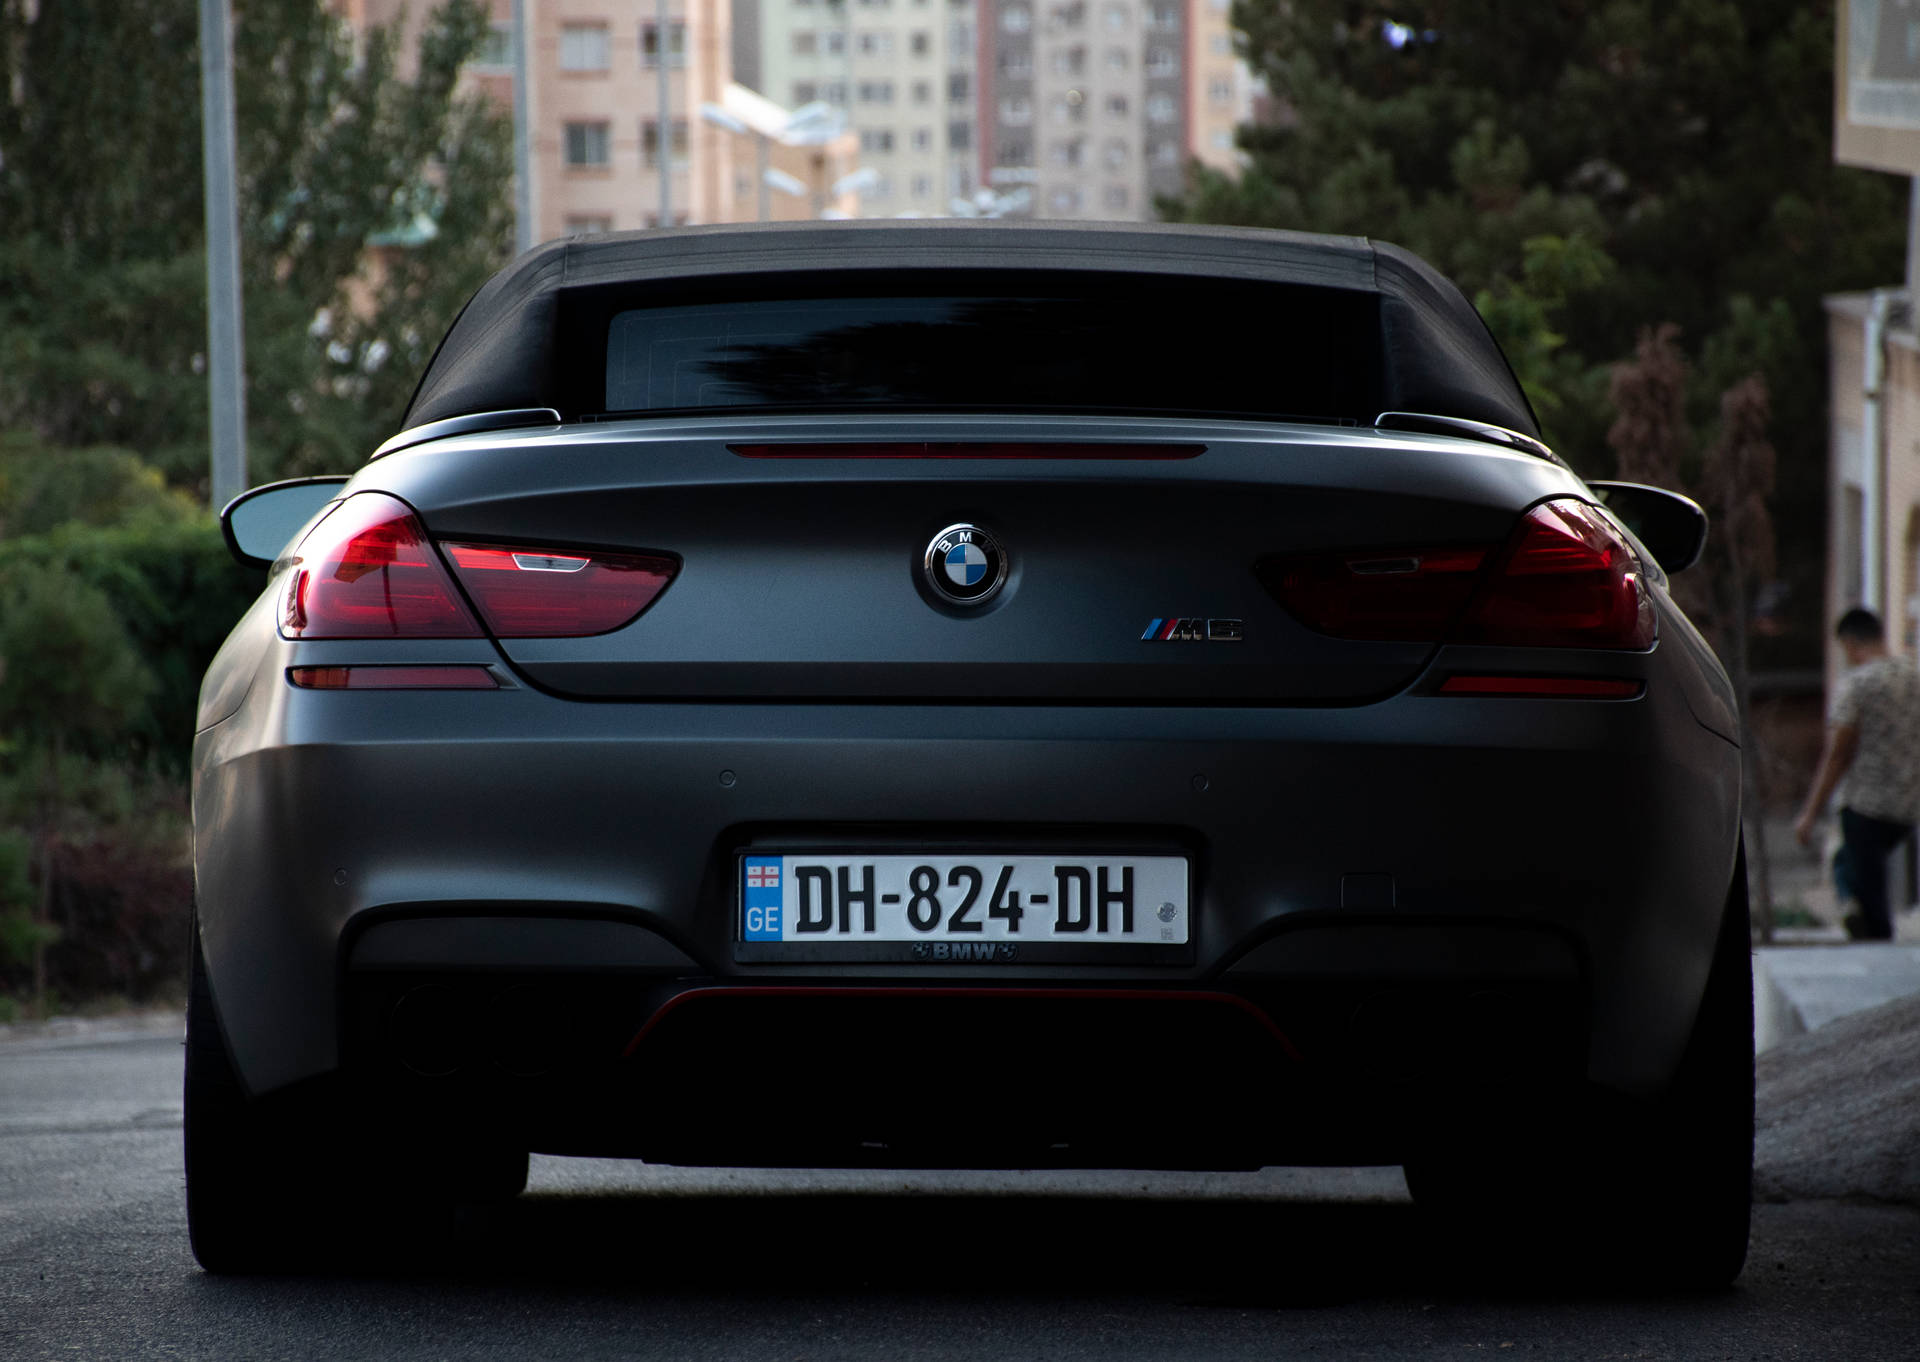 Back of A Parked Black BMW M Wallpaper